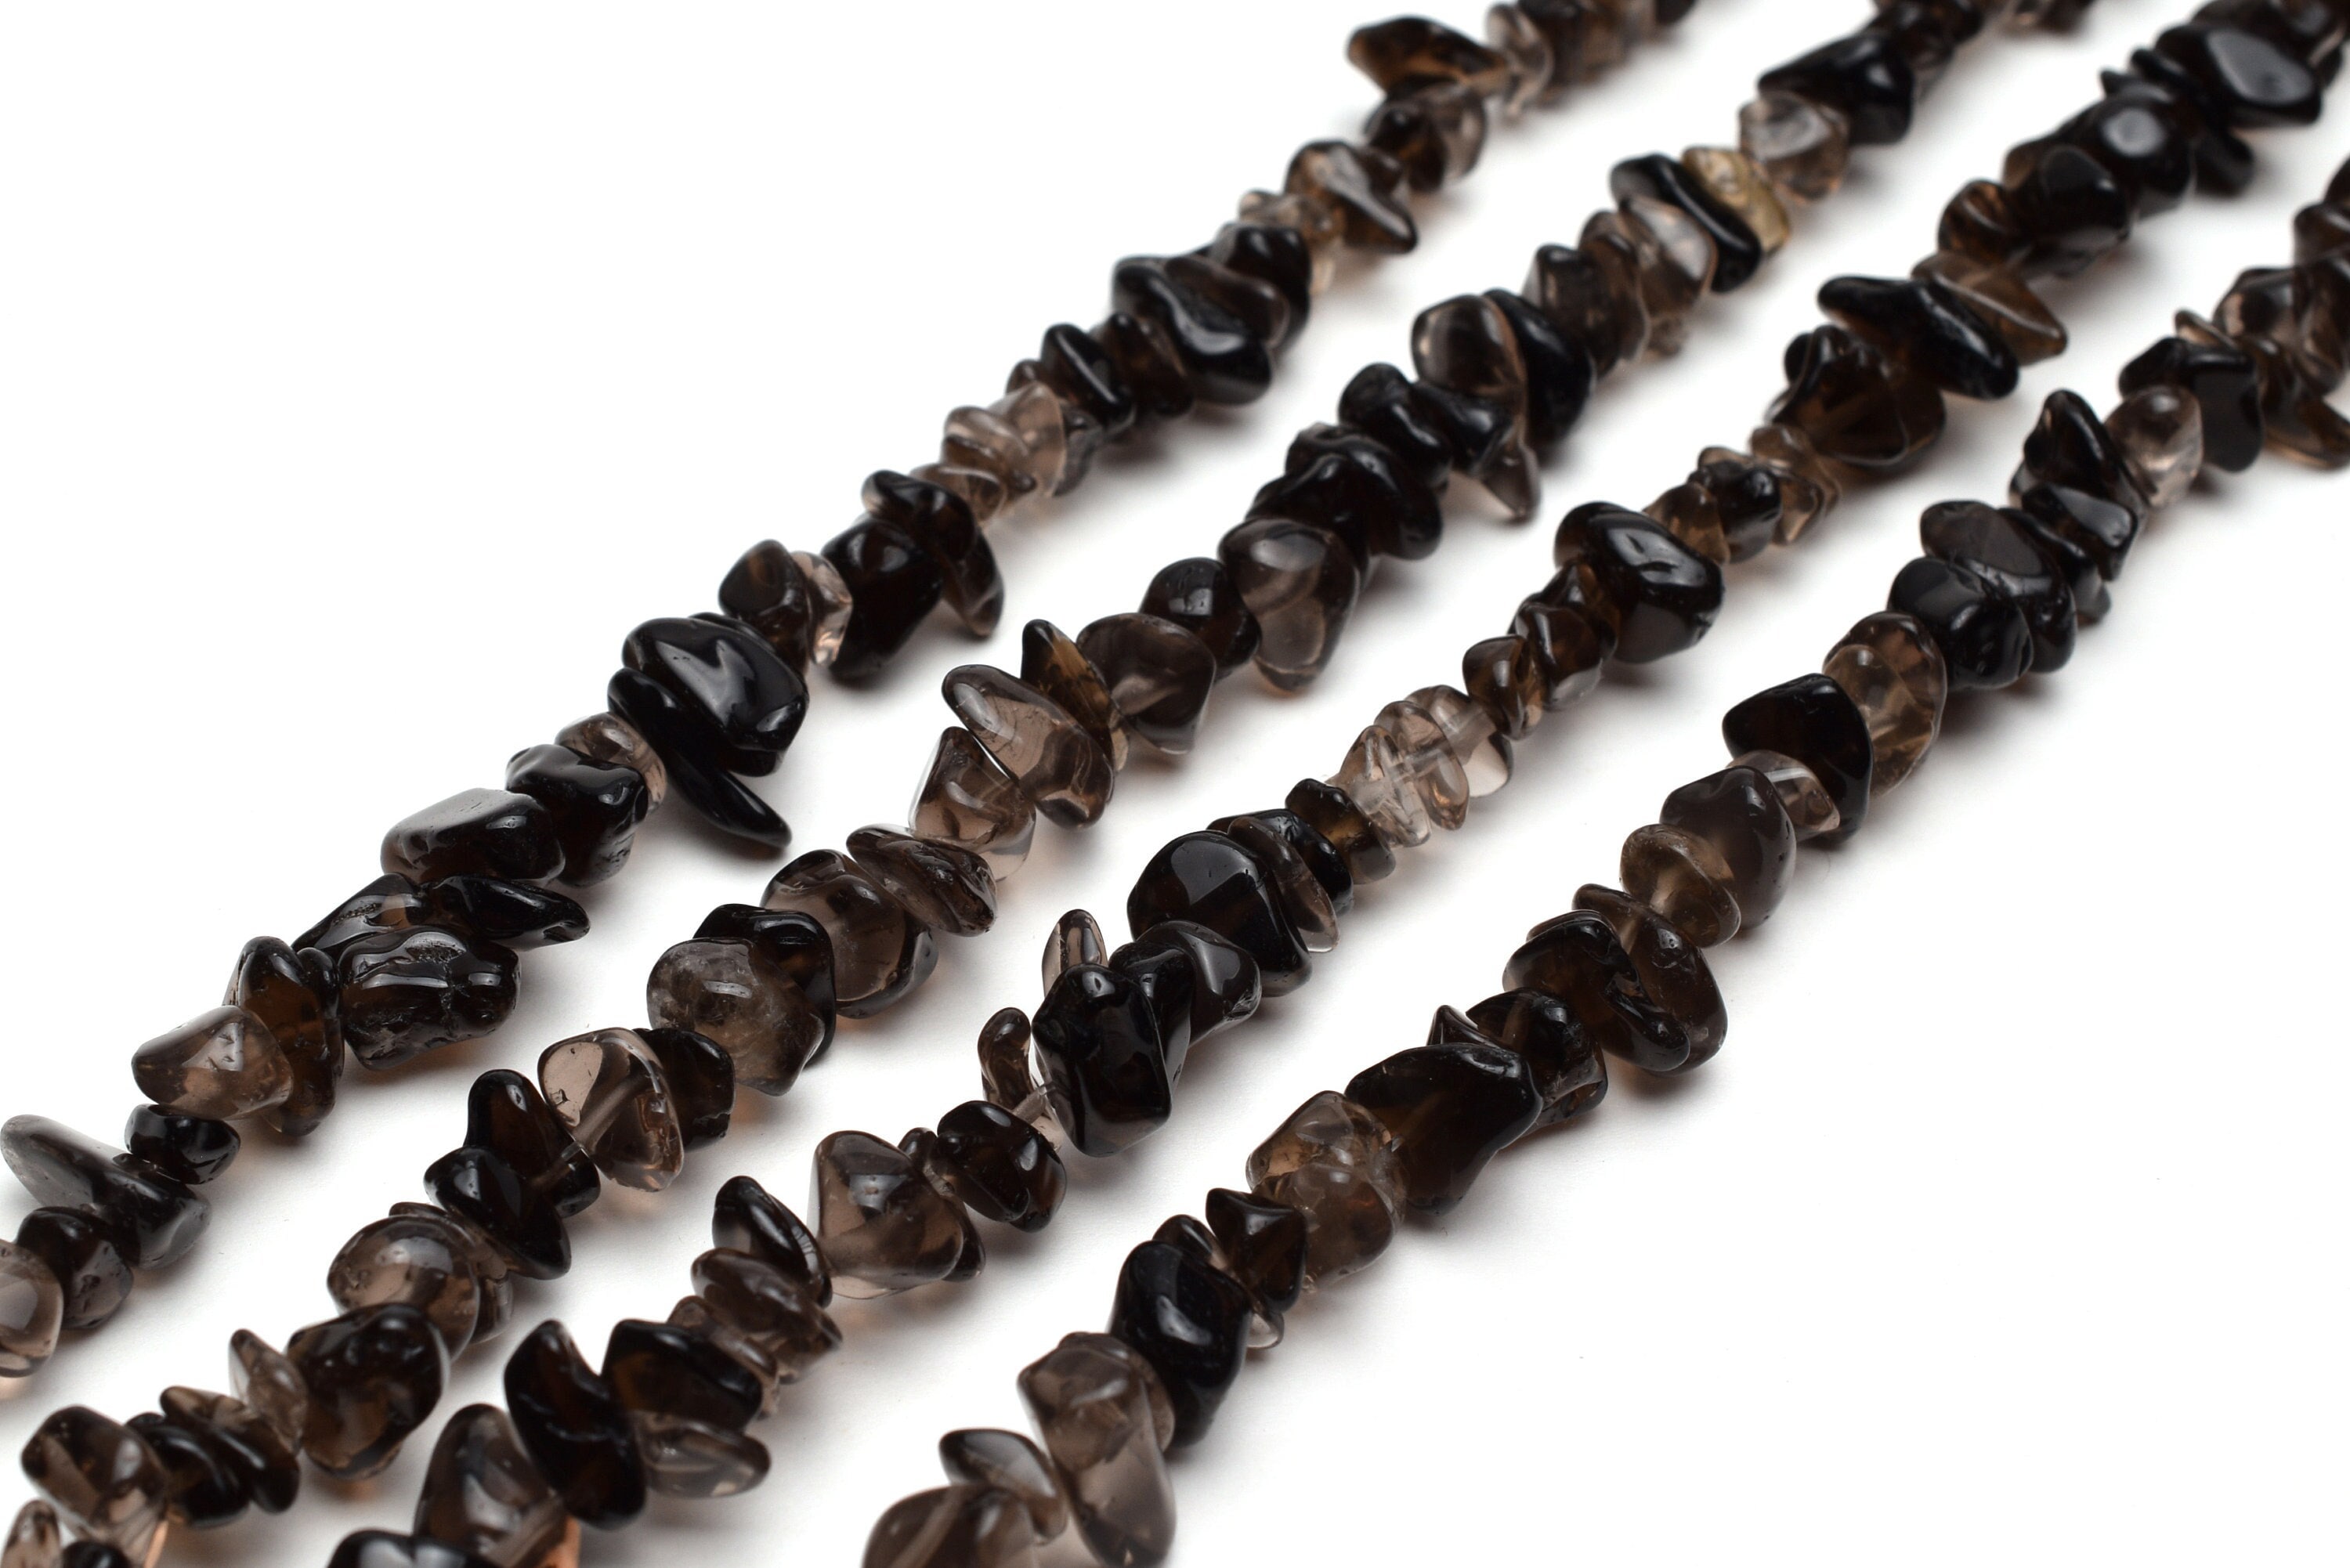 Brown Smoky Quartz Beads Chip Approx 3-8mm Long Strand Of 240+